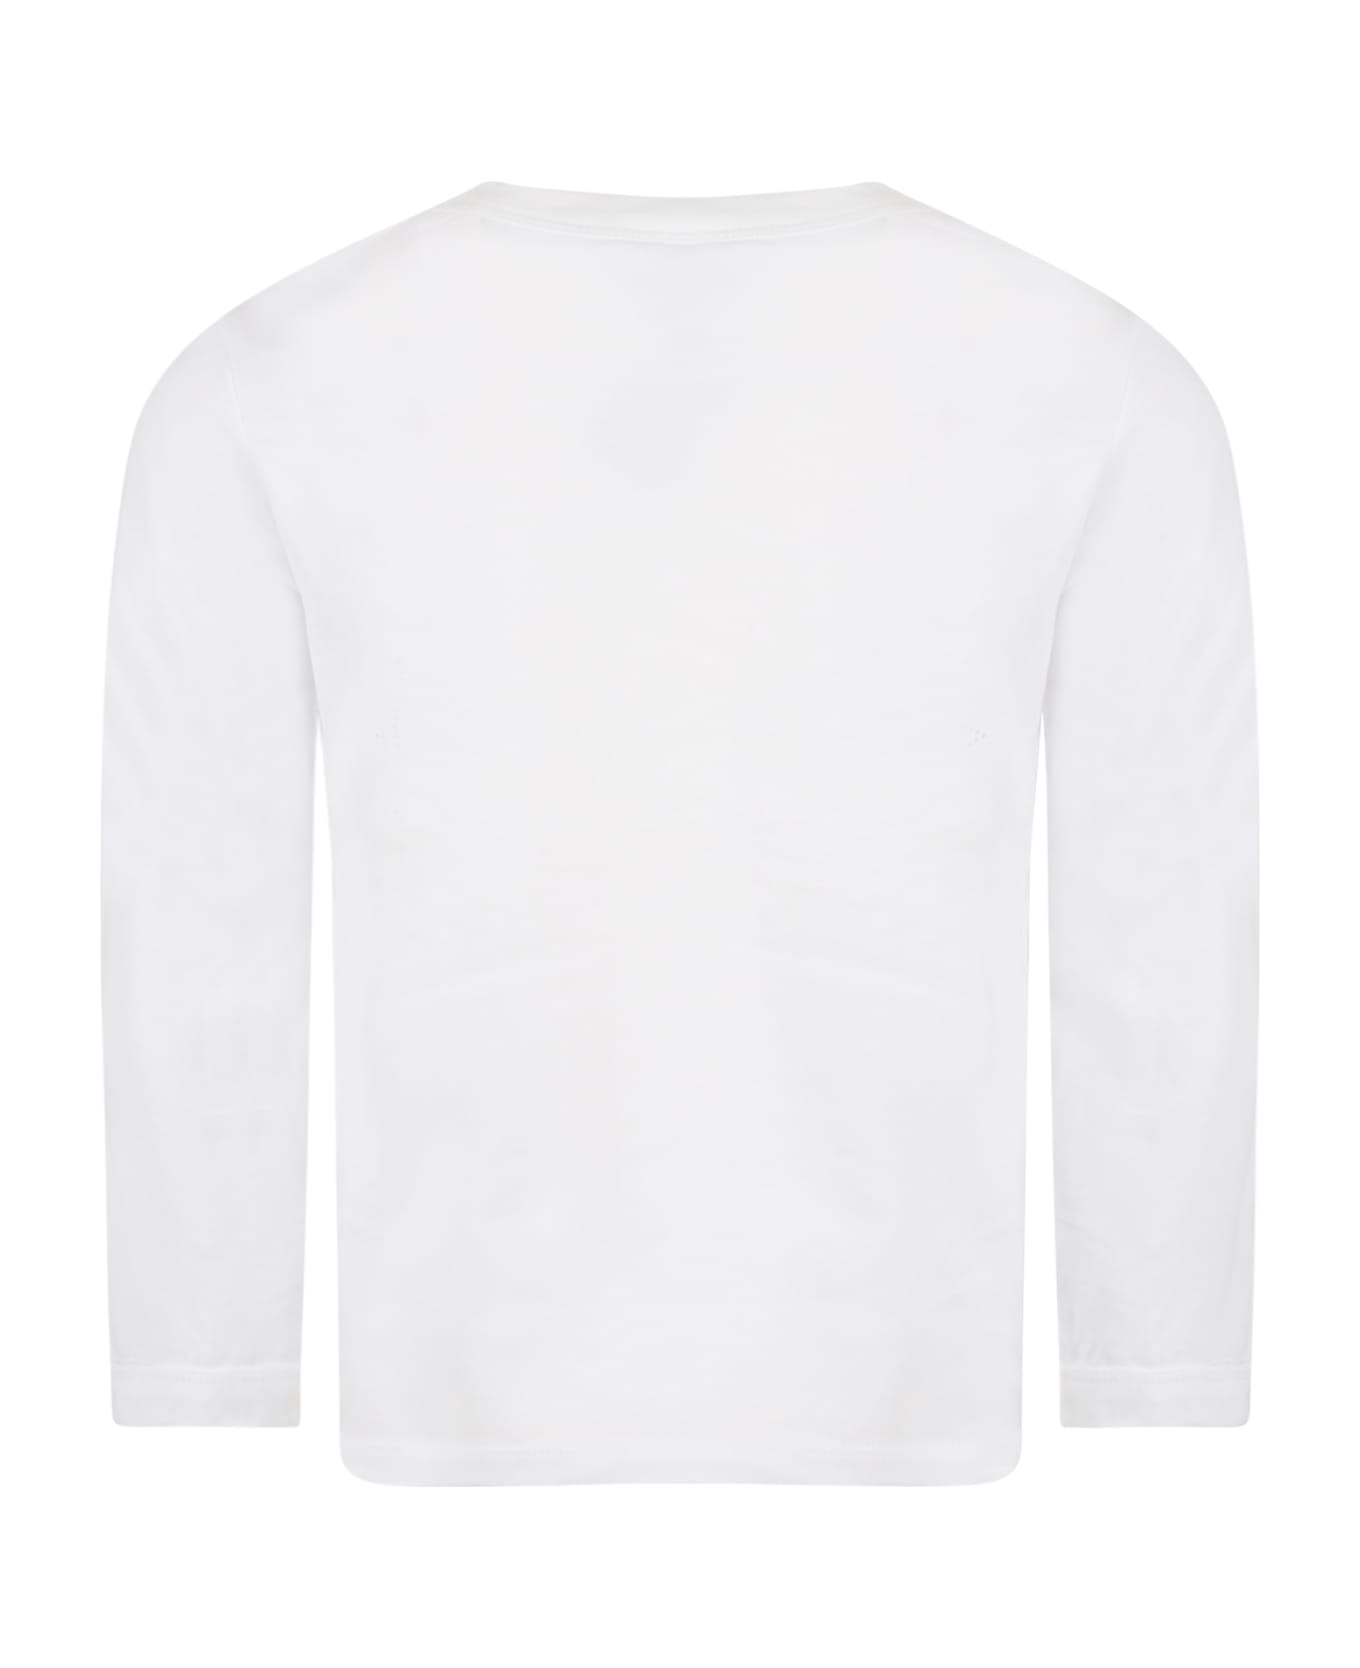 Stella McCartney Kids White T-shirt For Boy With Fox - White